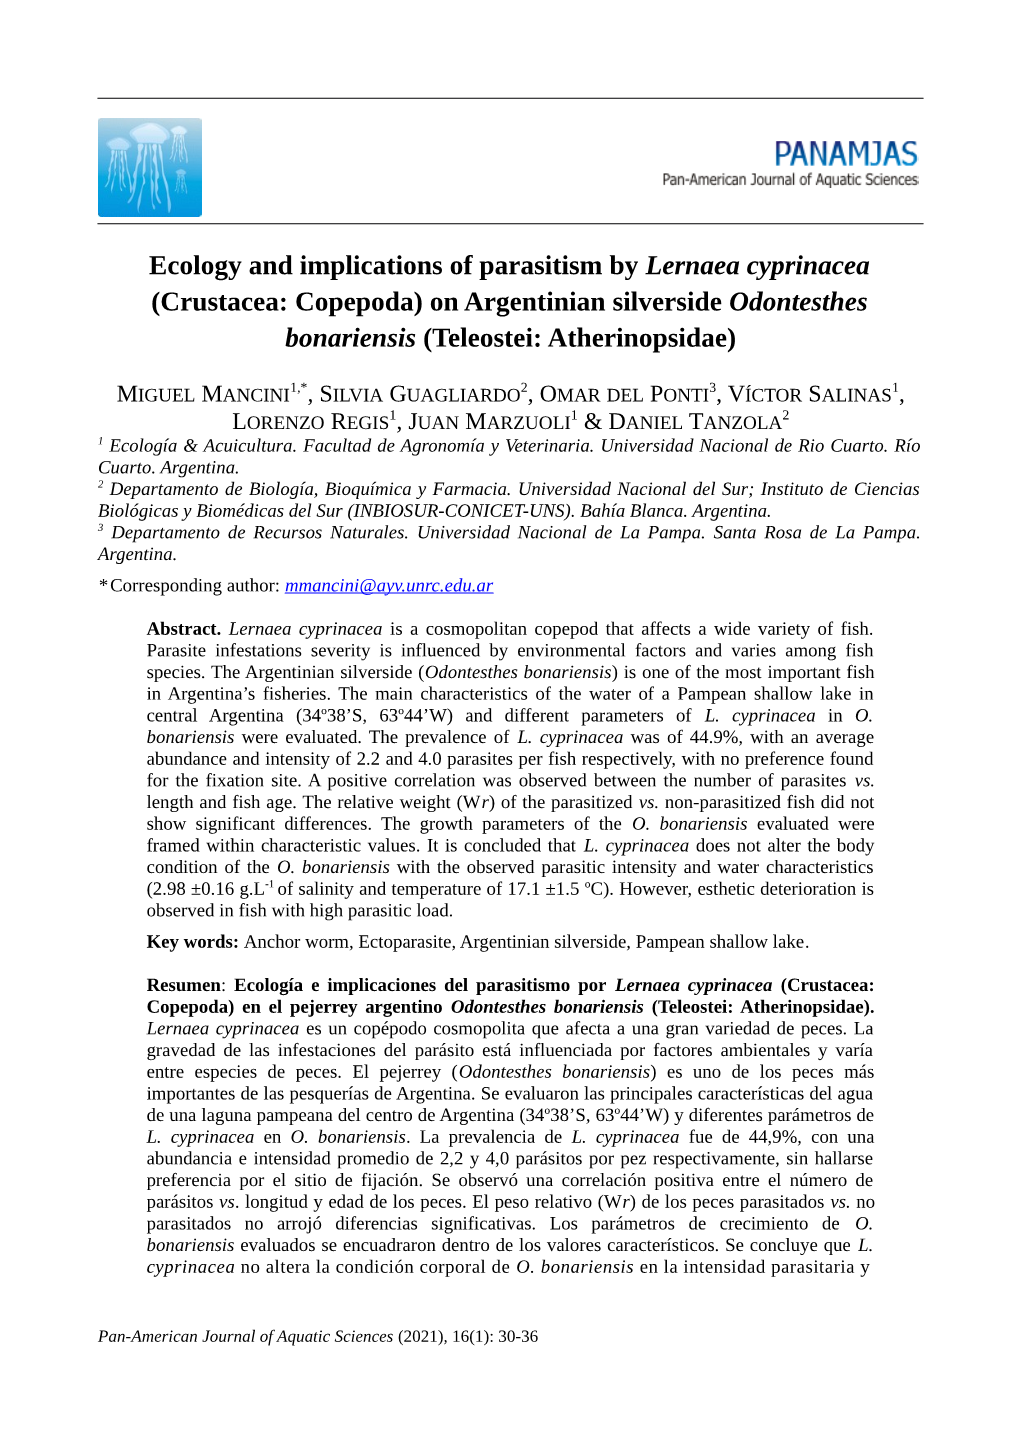 Ecology and Implications of Parasitism by Lernaea Cyprinacea (Crustacea: Copepoda) on Argentinian Silverside Odontesthes Bonariensis (Teleostei: Atherinopsidae)